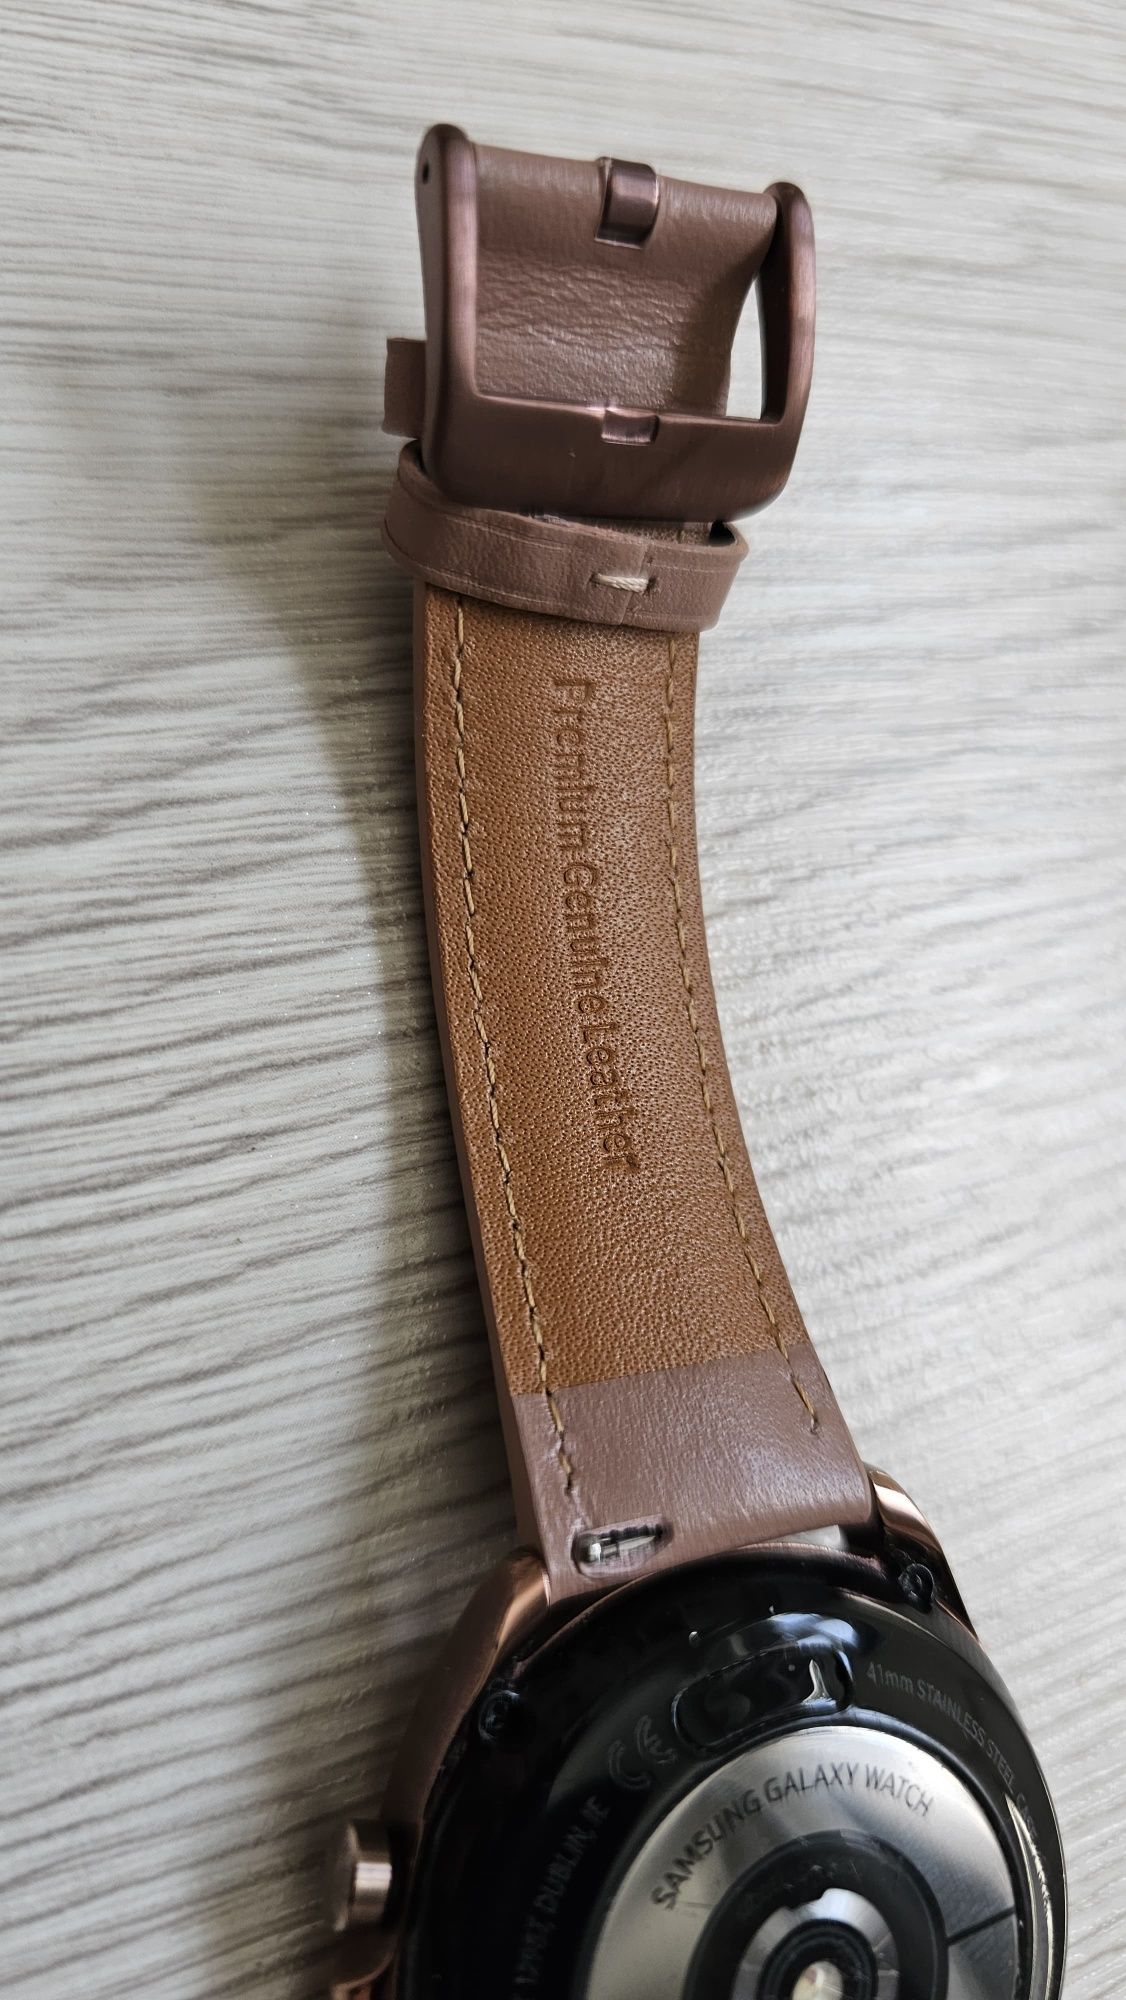 Vând Samsung Galaxy Smartwatch 3 bronze